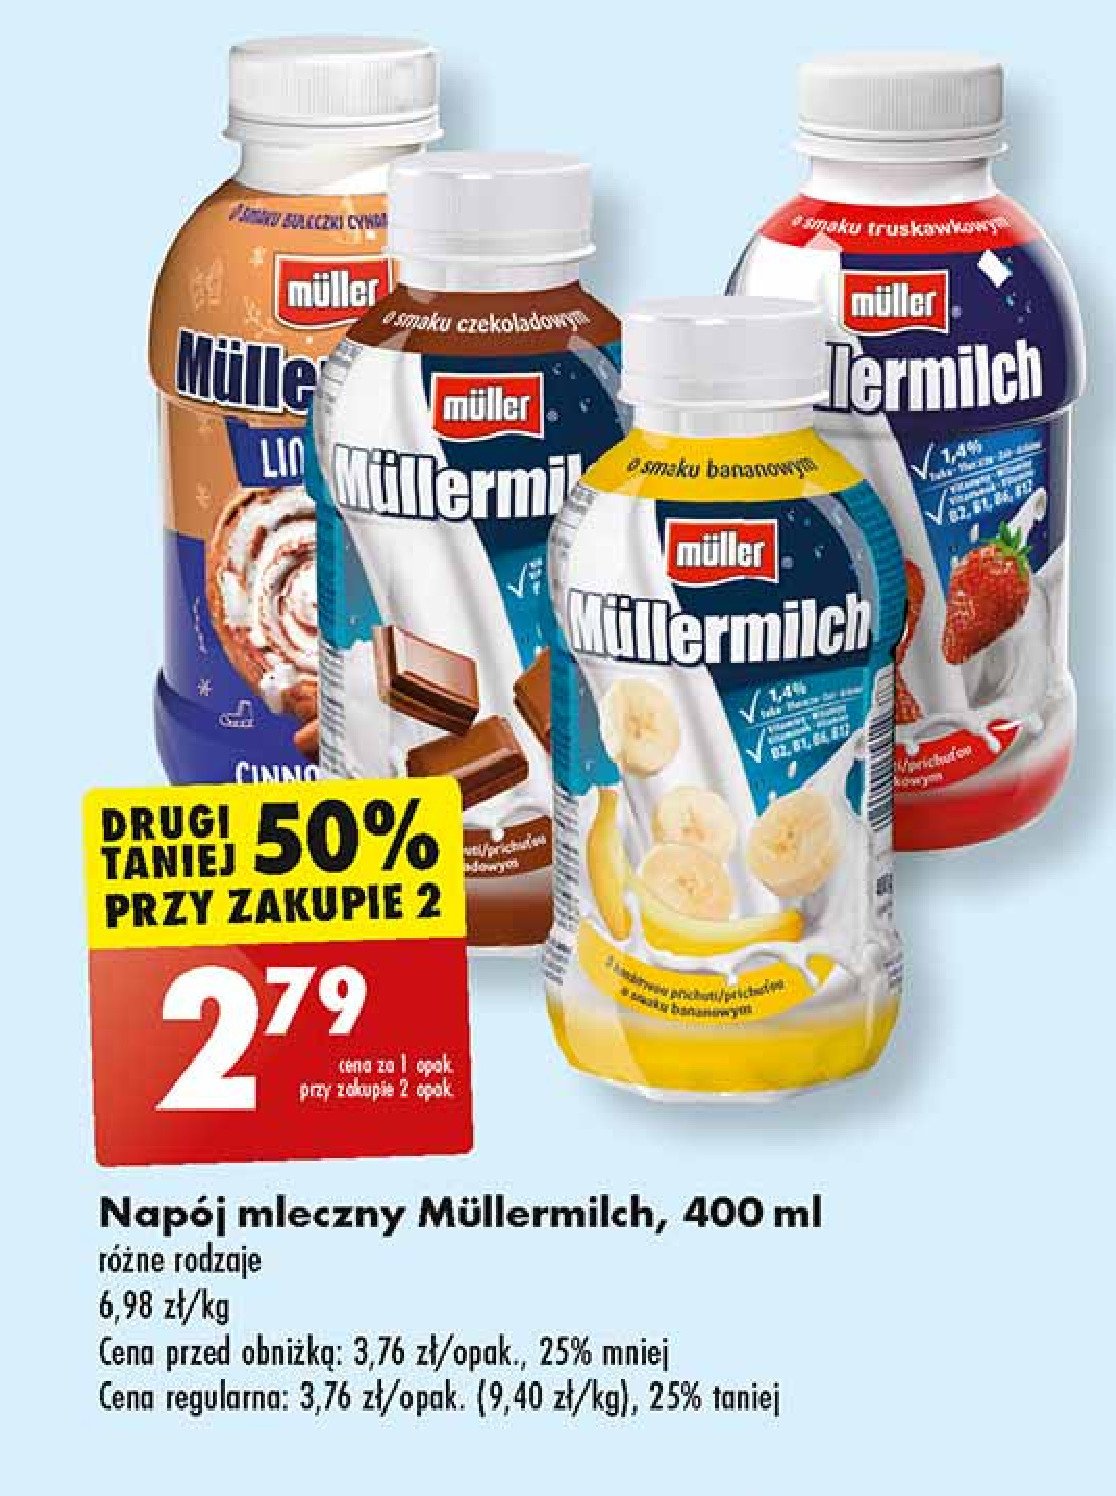 Napój mleczny cinnamon roll Mullermilch limited promocja